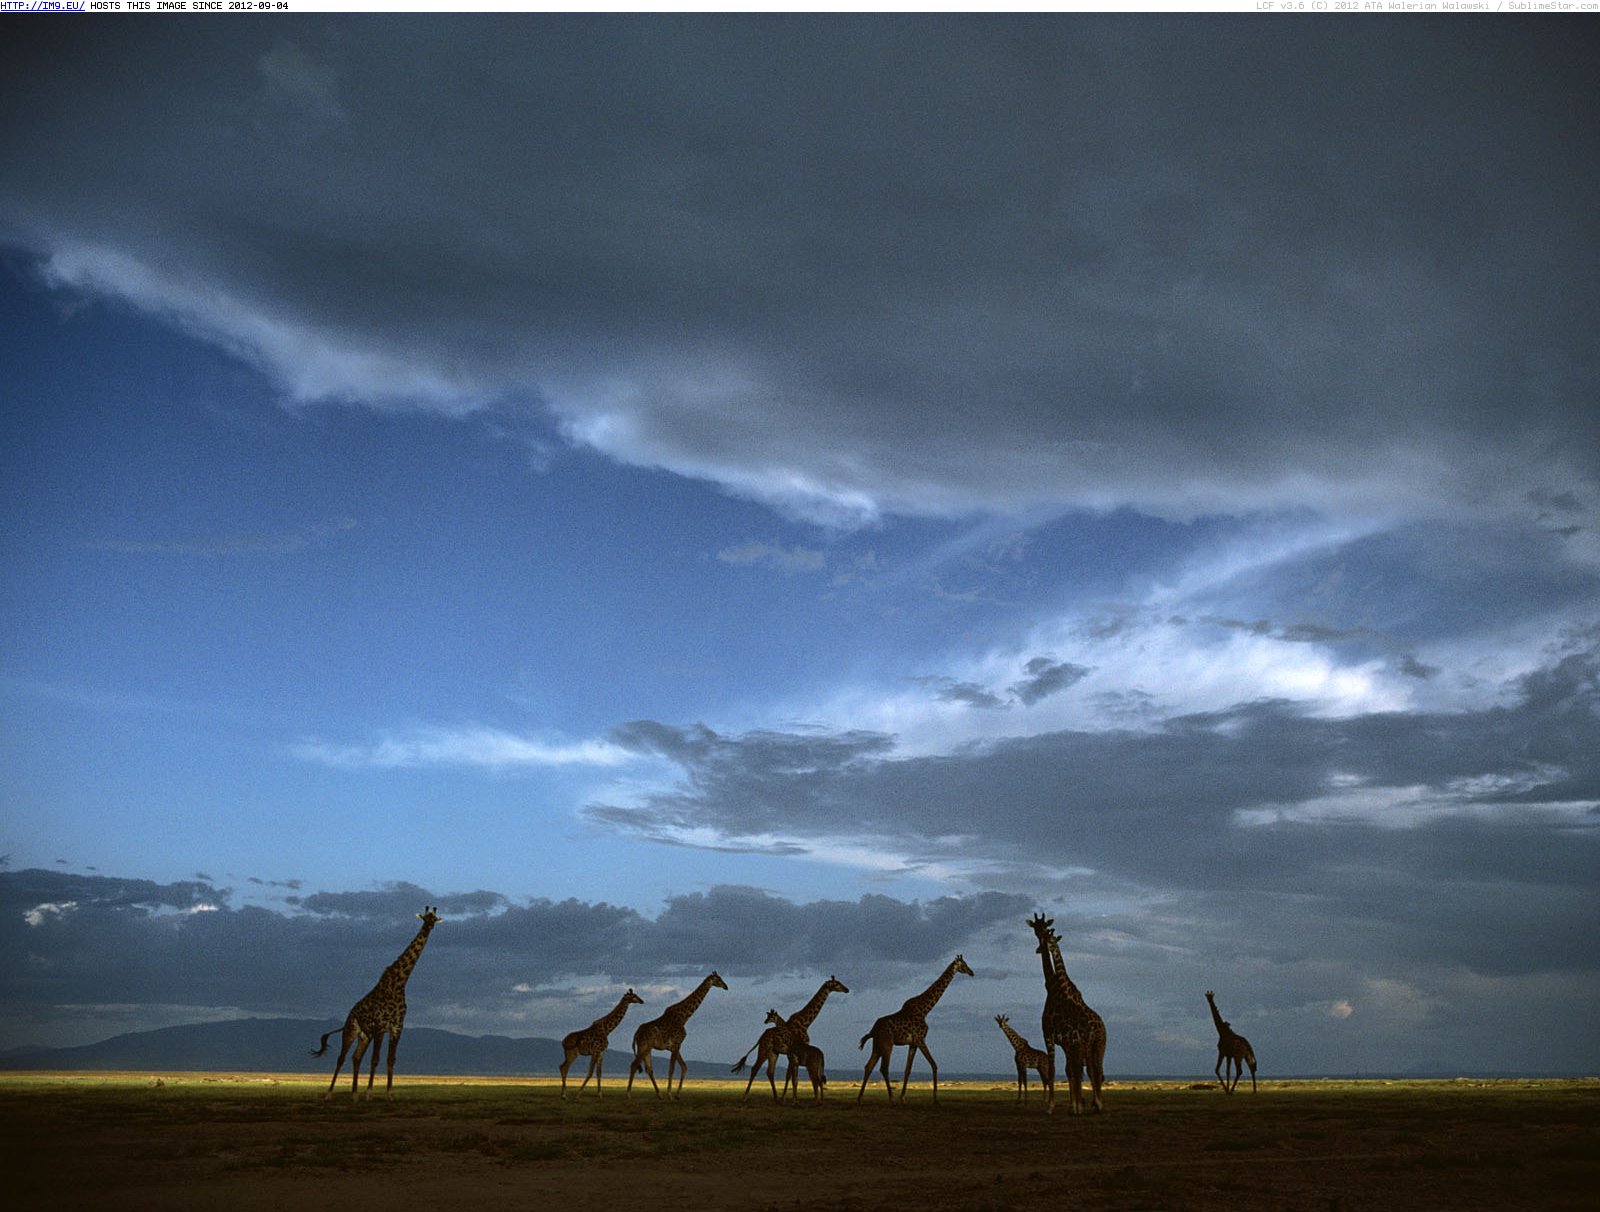 Giraffe Herd Crossing Grasslands, Serengeti National Park, Tanzania (in Beautiful photos and wallpapers)